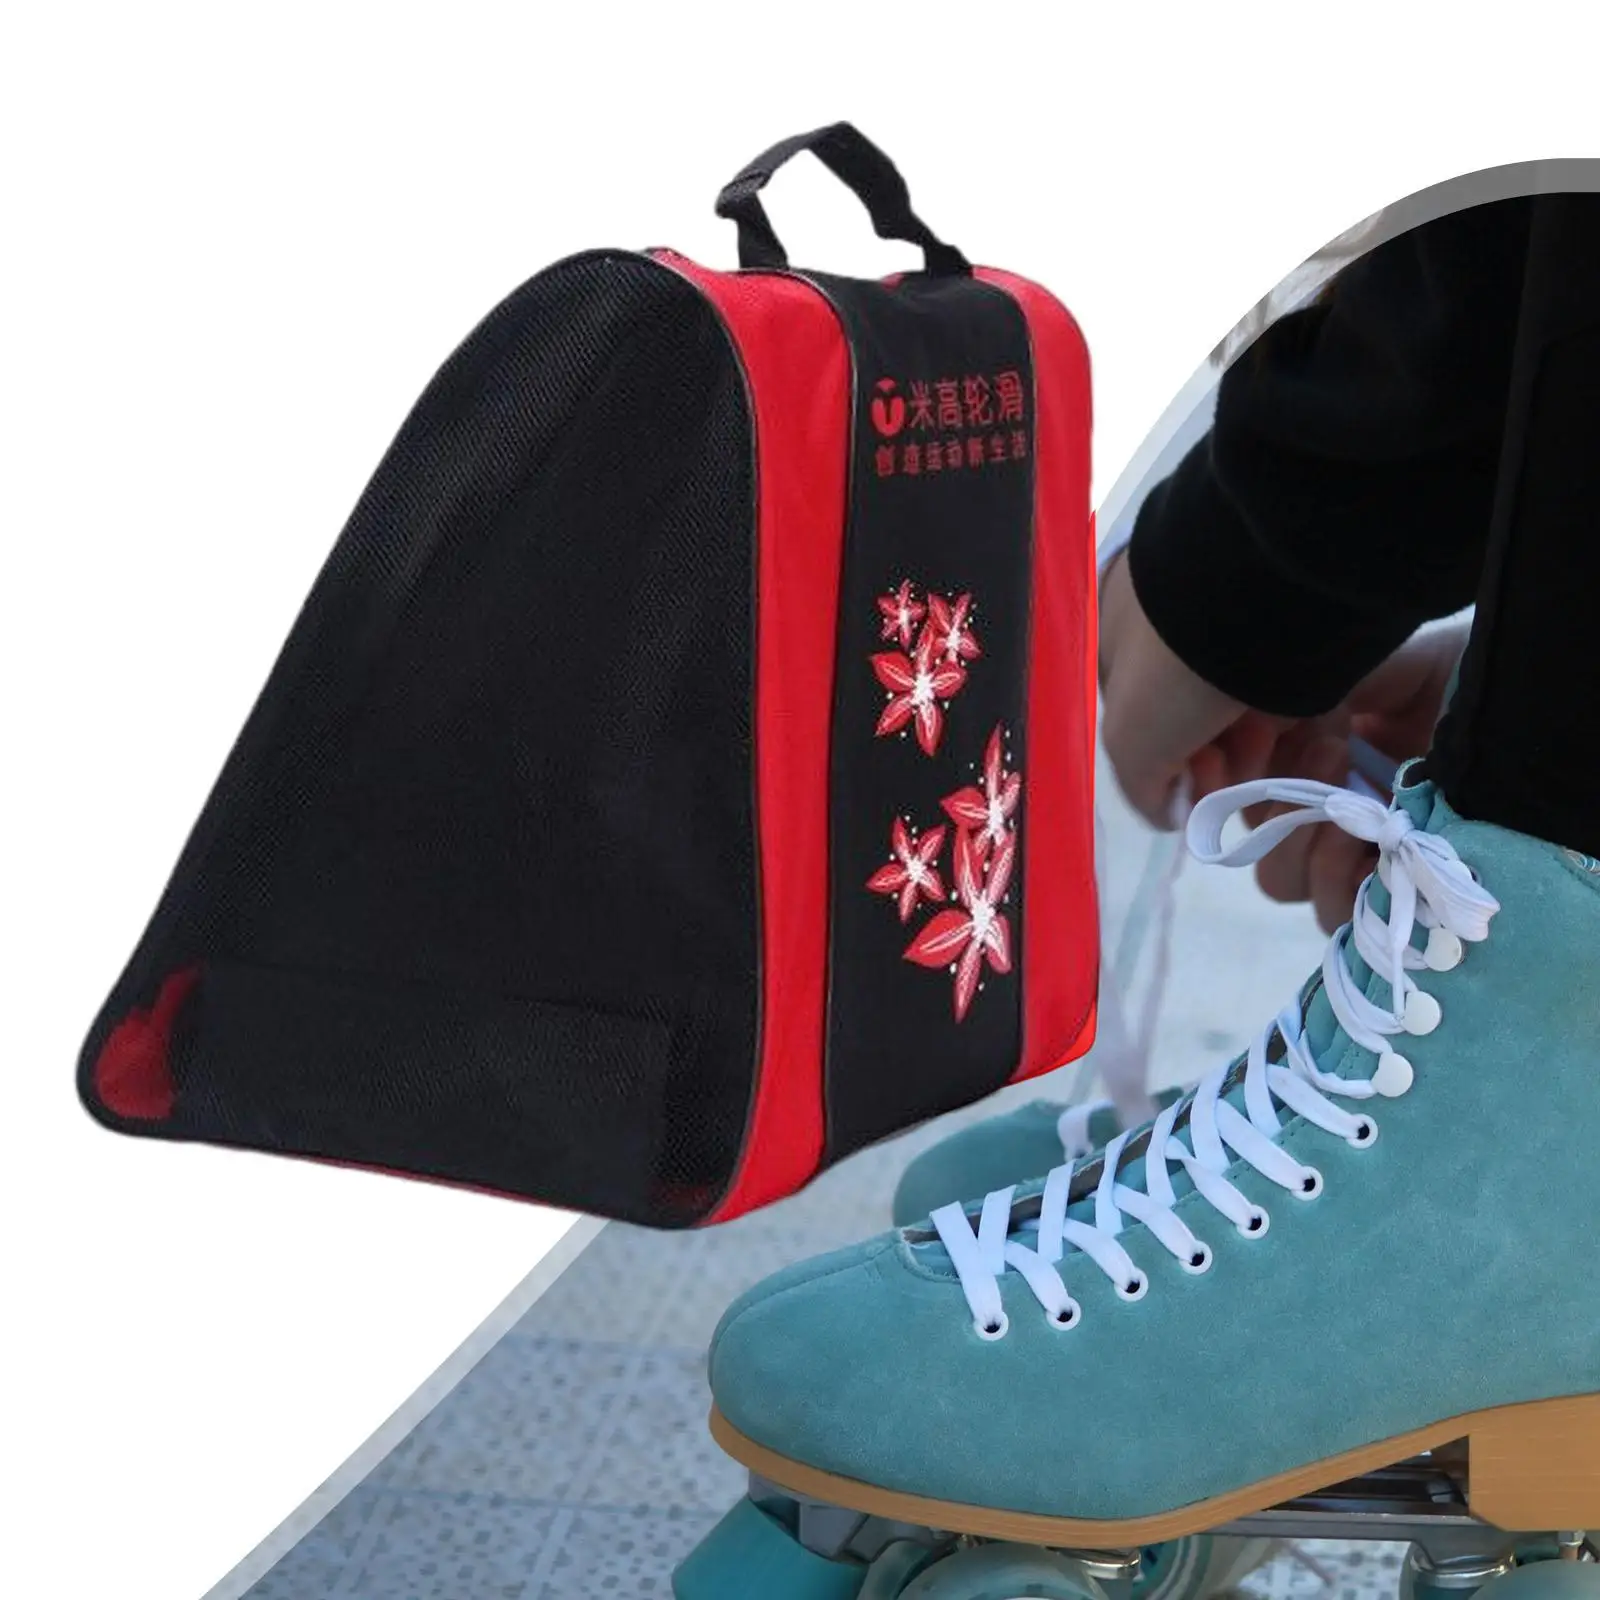 Portable Roller Skating Bag 3Layers Storage Bag Skating Shoes Breathable